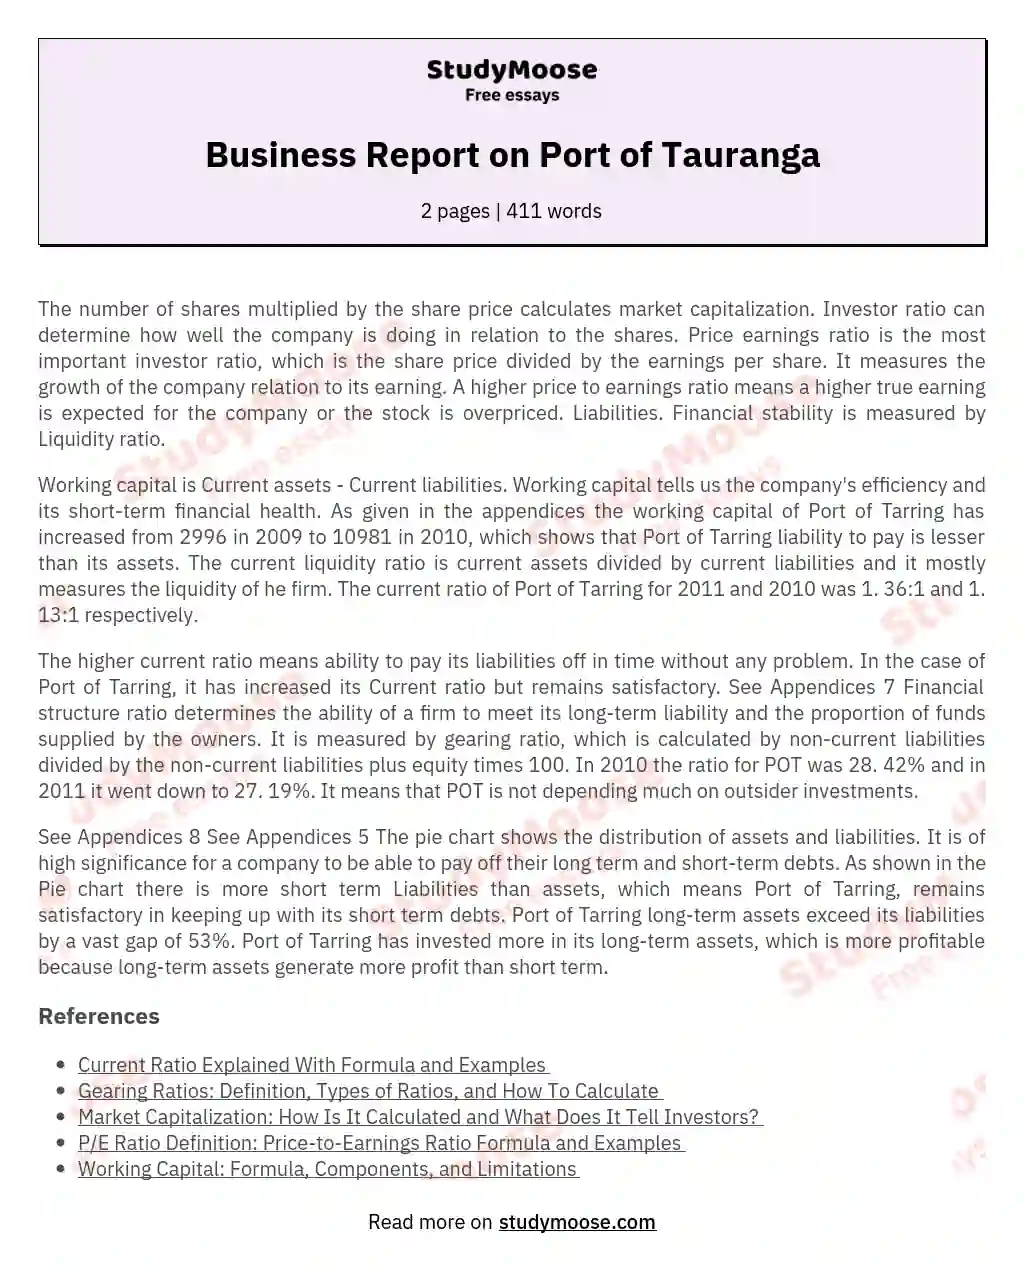 Business Report on Port of Tauranga essay